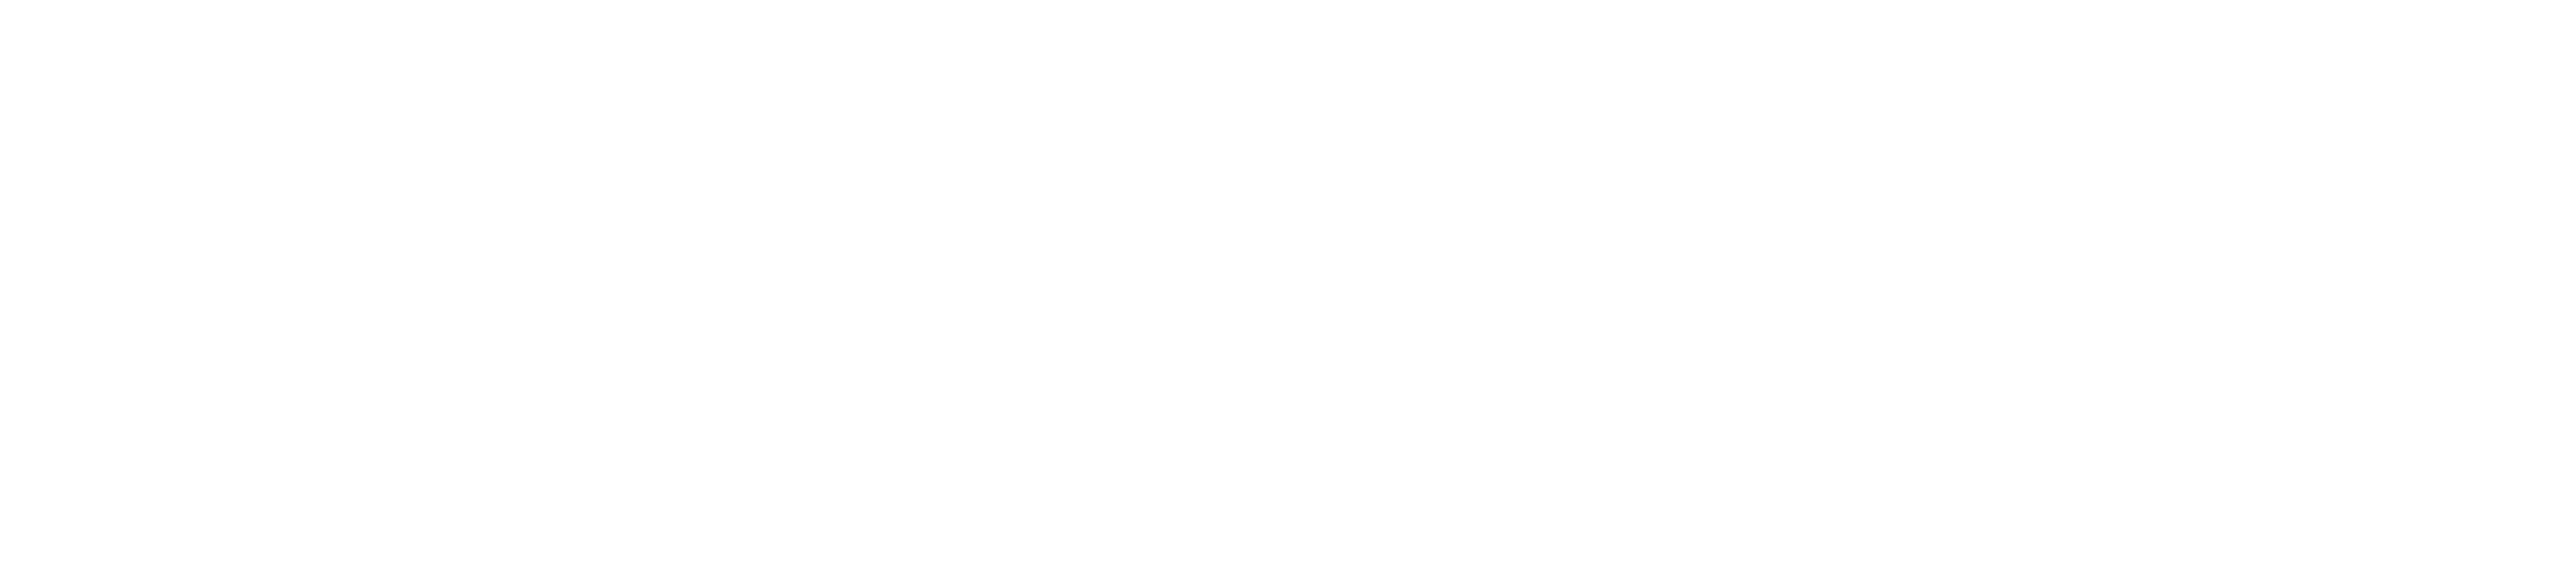 dwen-dell-mentor-logos